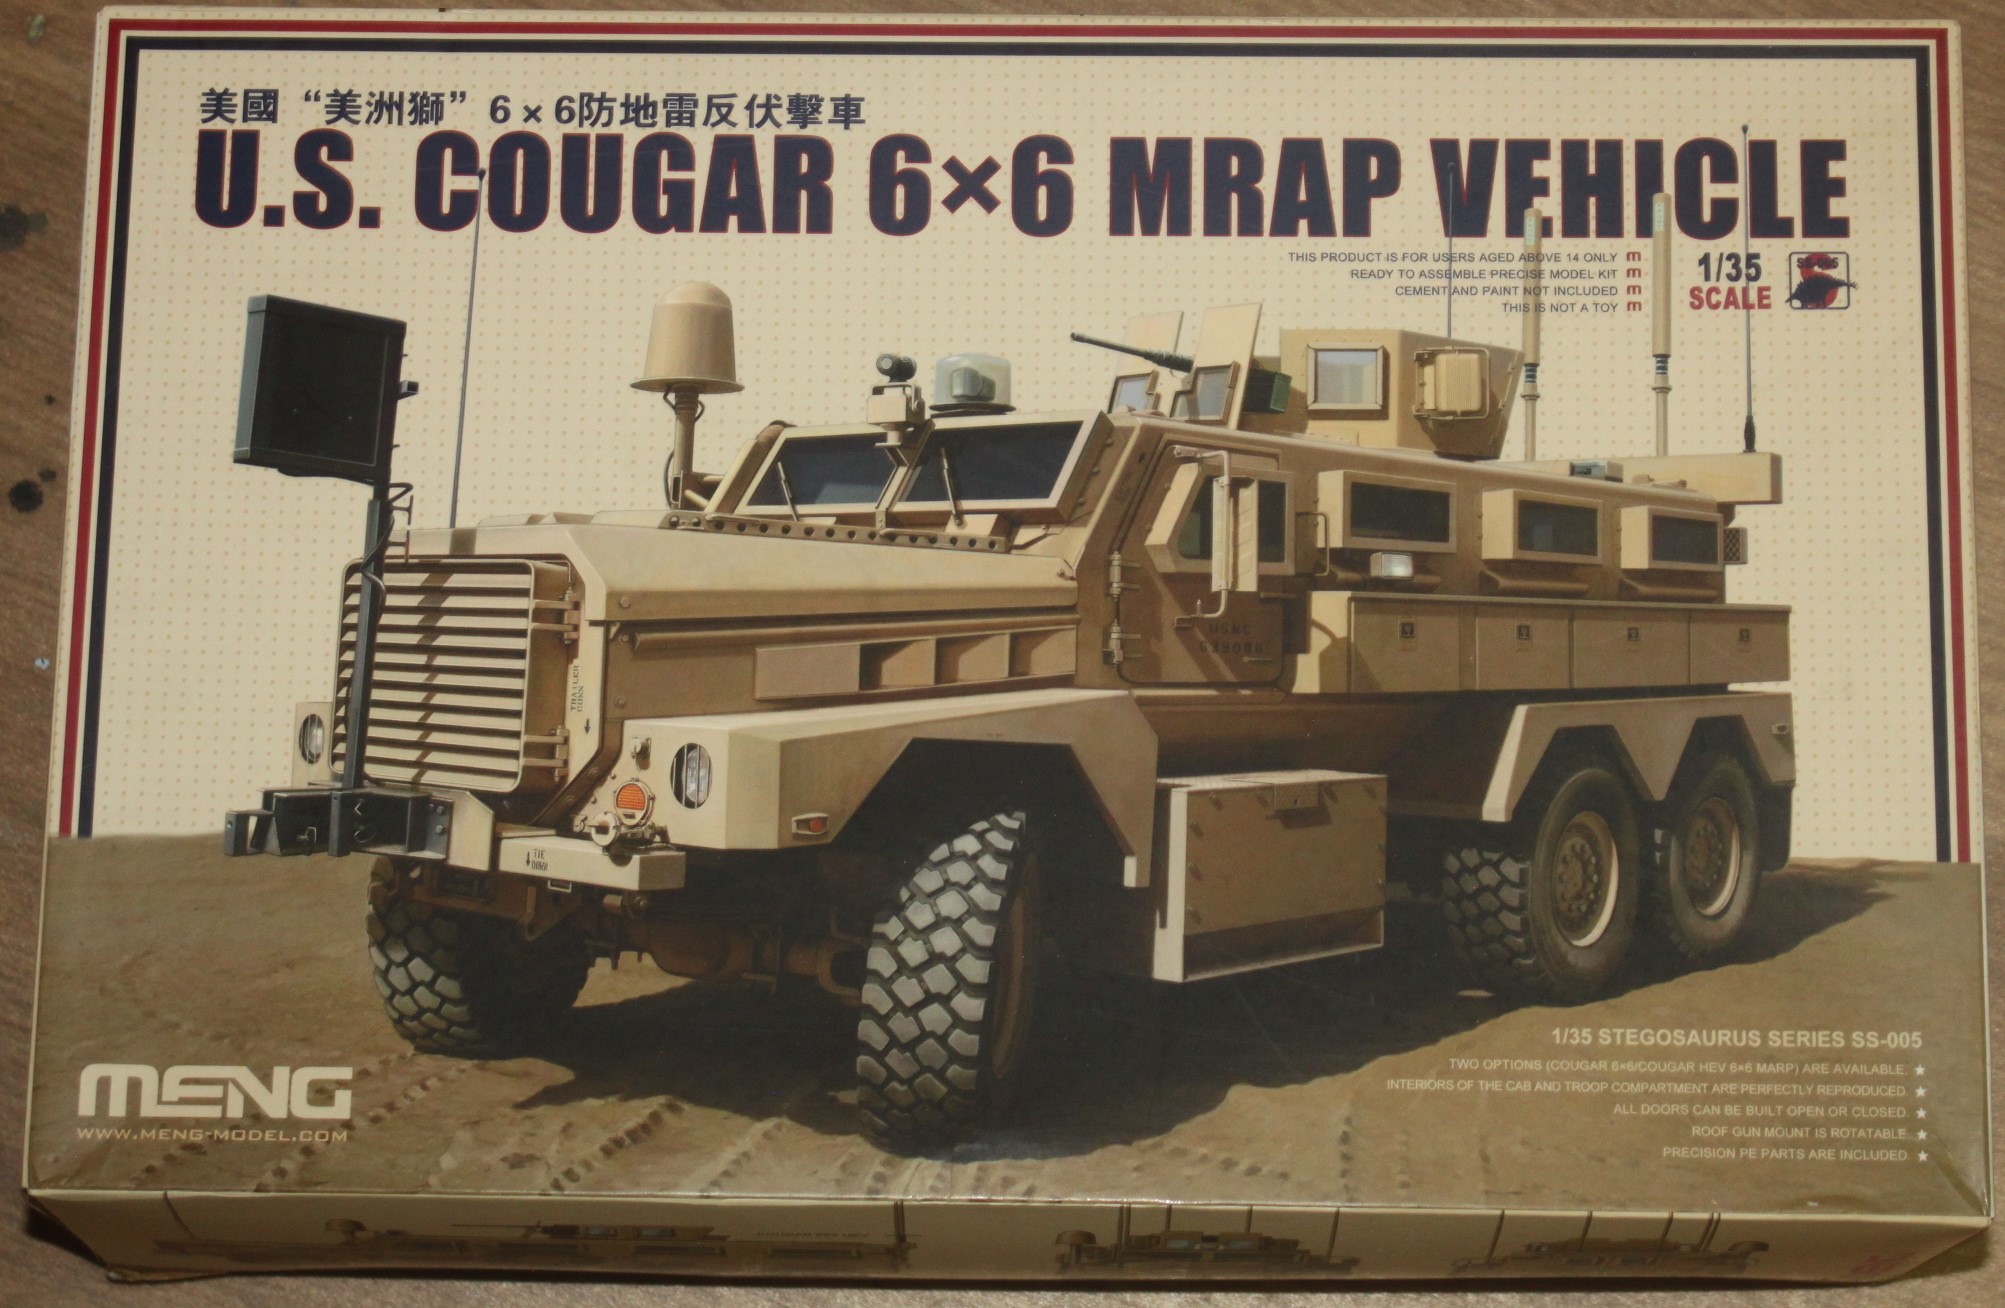 Cougar 6x6 MRAP Vehicle, MENG 1/35 52916067507_406dcde0f5_k